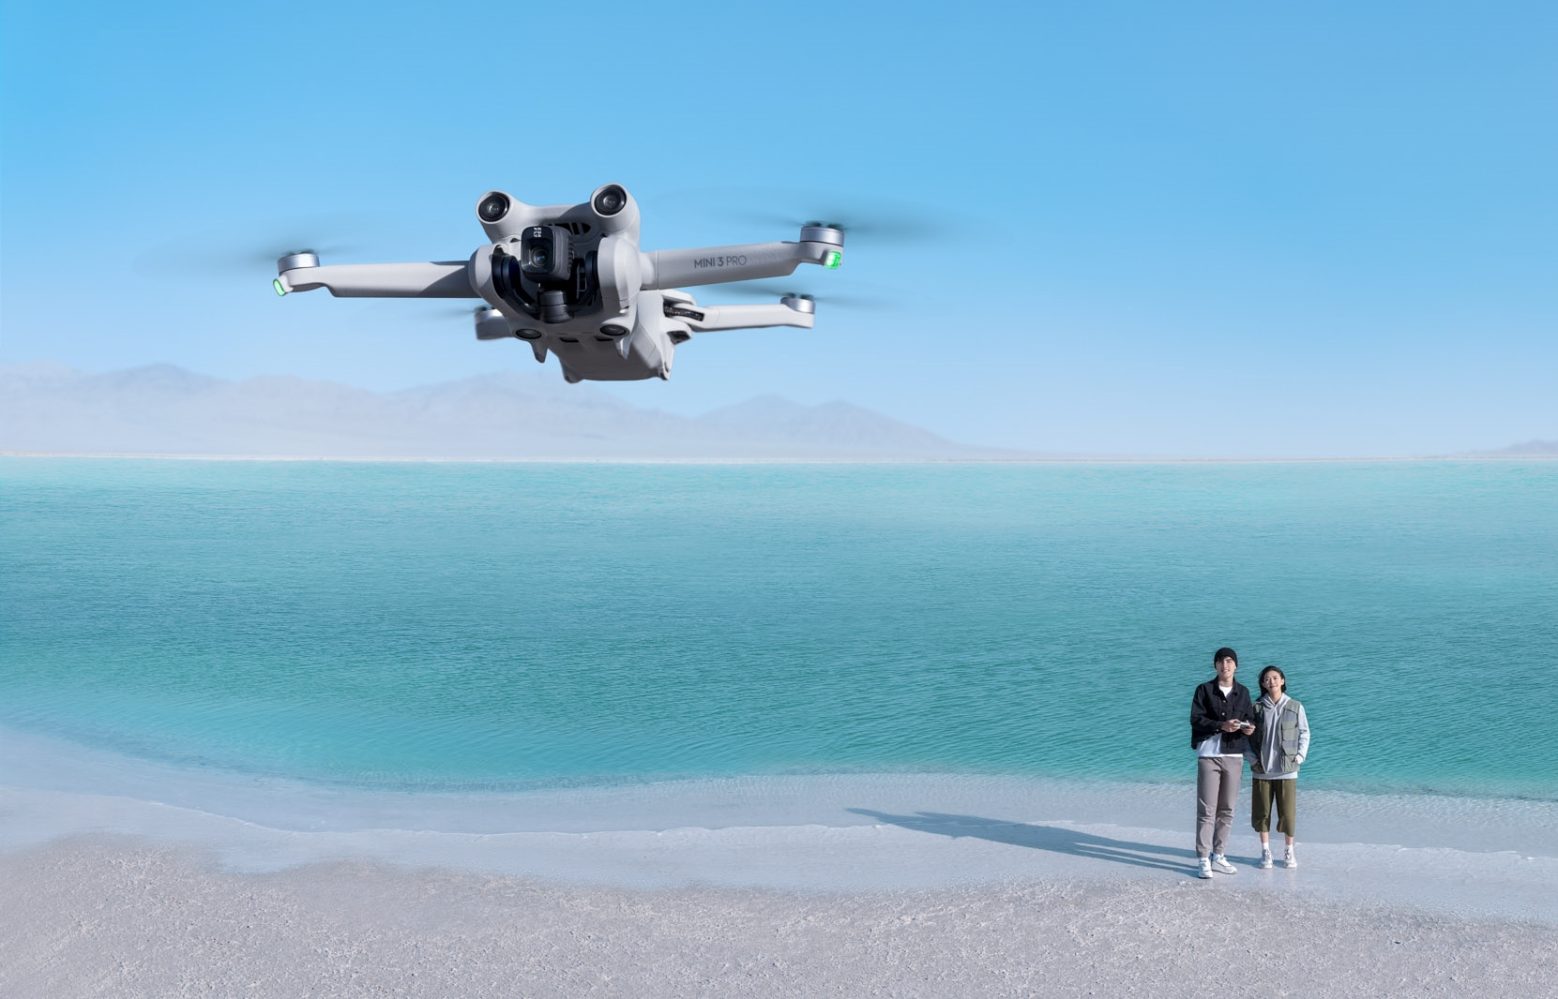 dji mobile sdk msdk mini 3 pro drone height restriction fly app